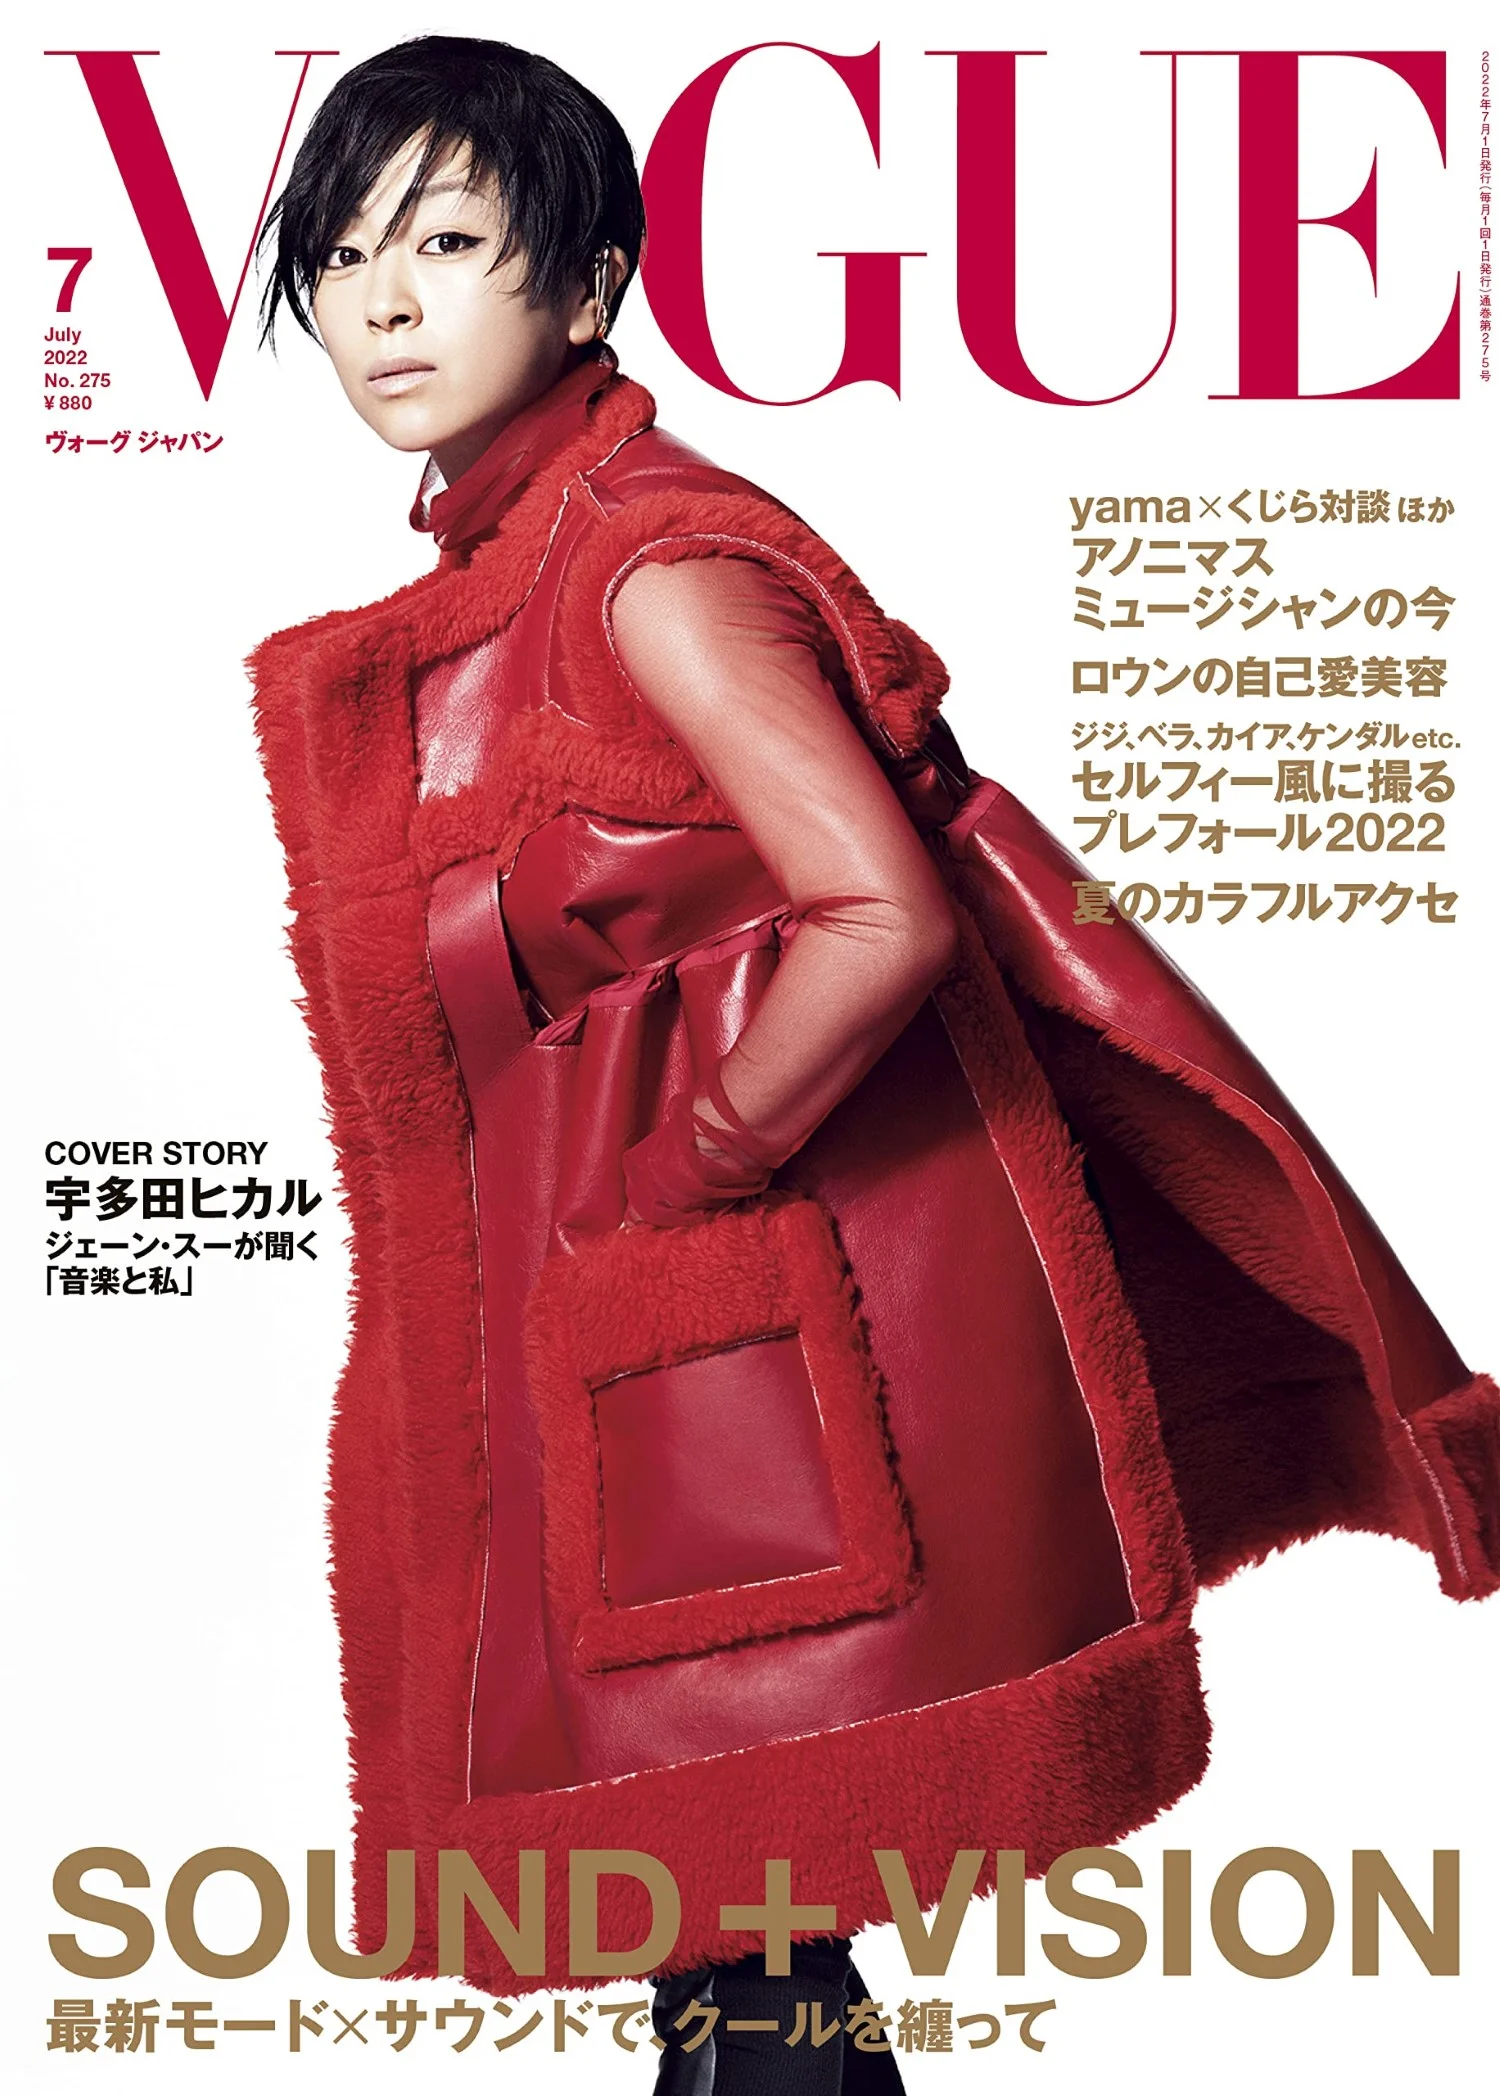 Hikaru Utada in Sacai on Vogue Japan July 2022 by Shoji Uchida